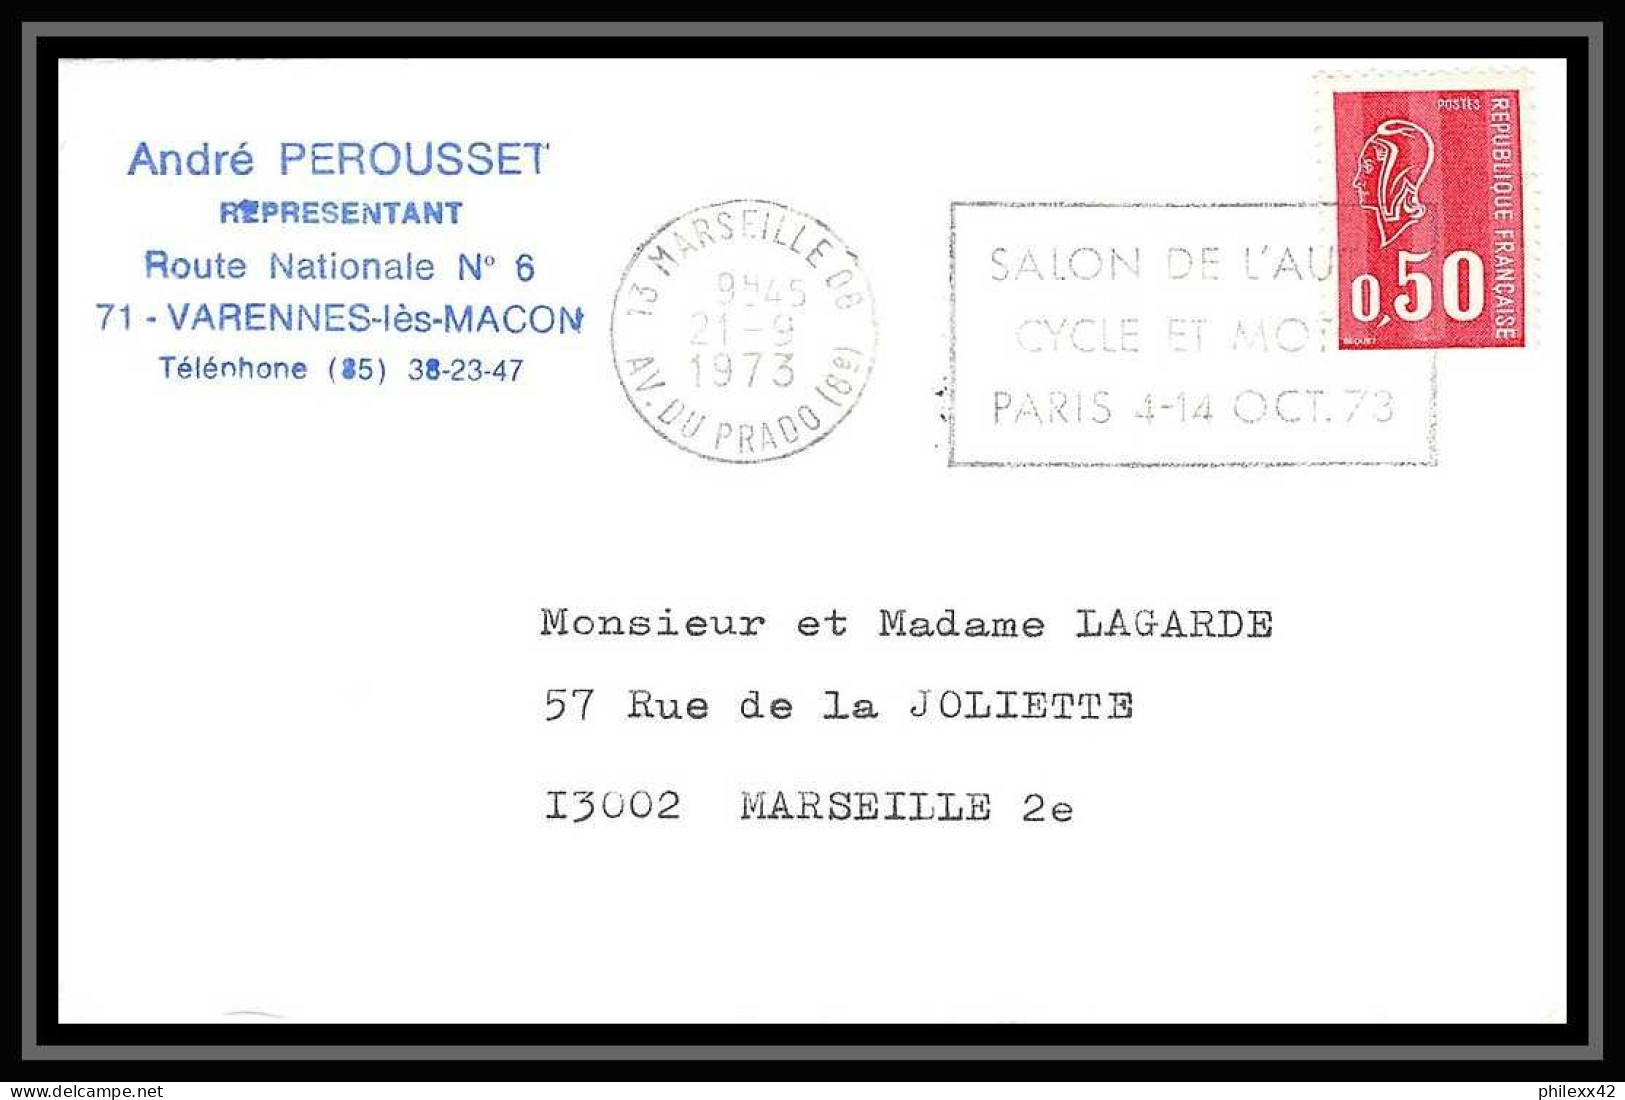 116569 lot de 15 Lettres Bouches du rhone Marseille Prado